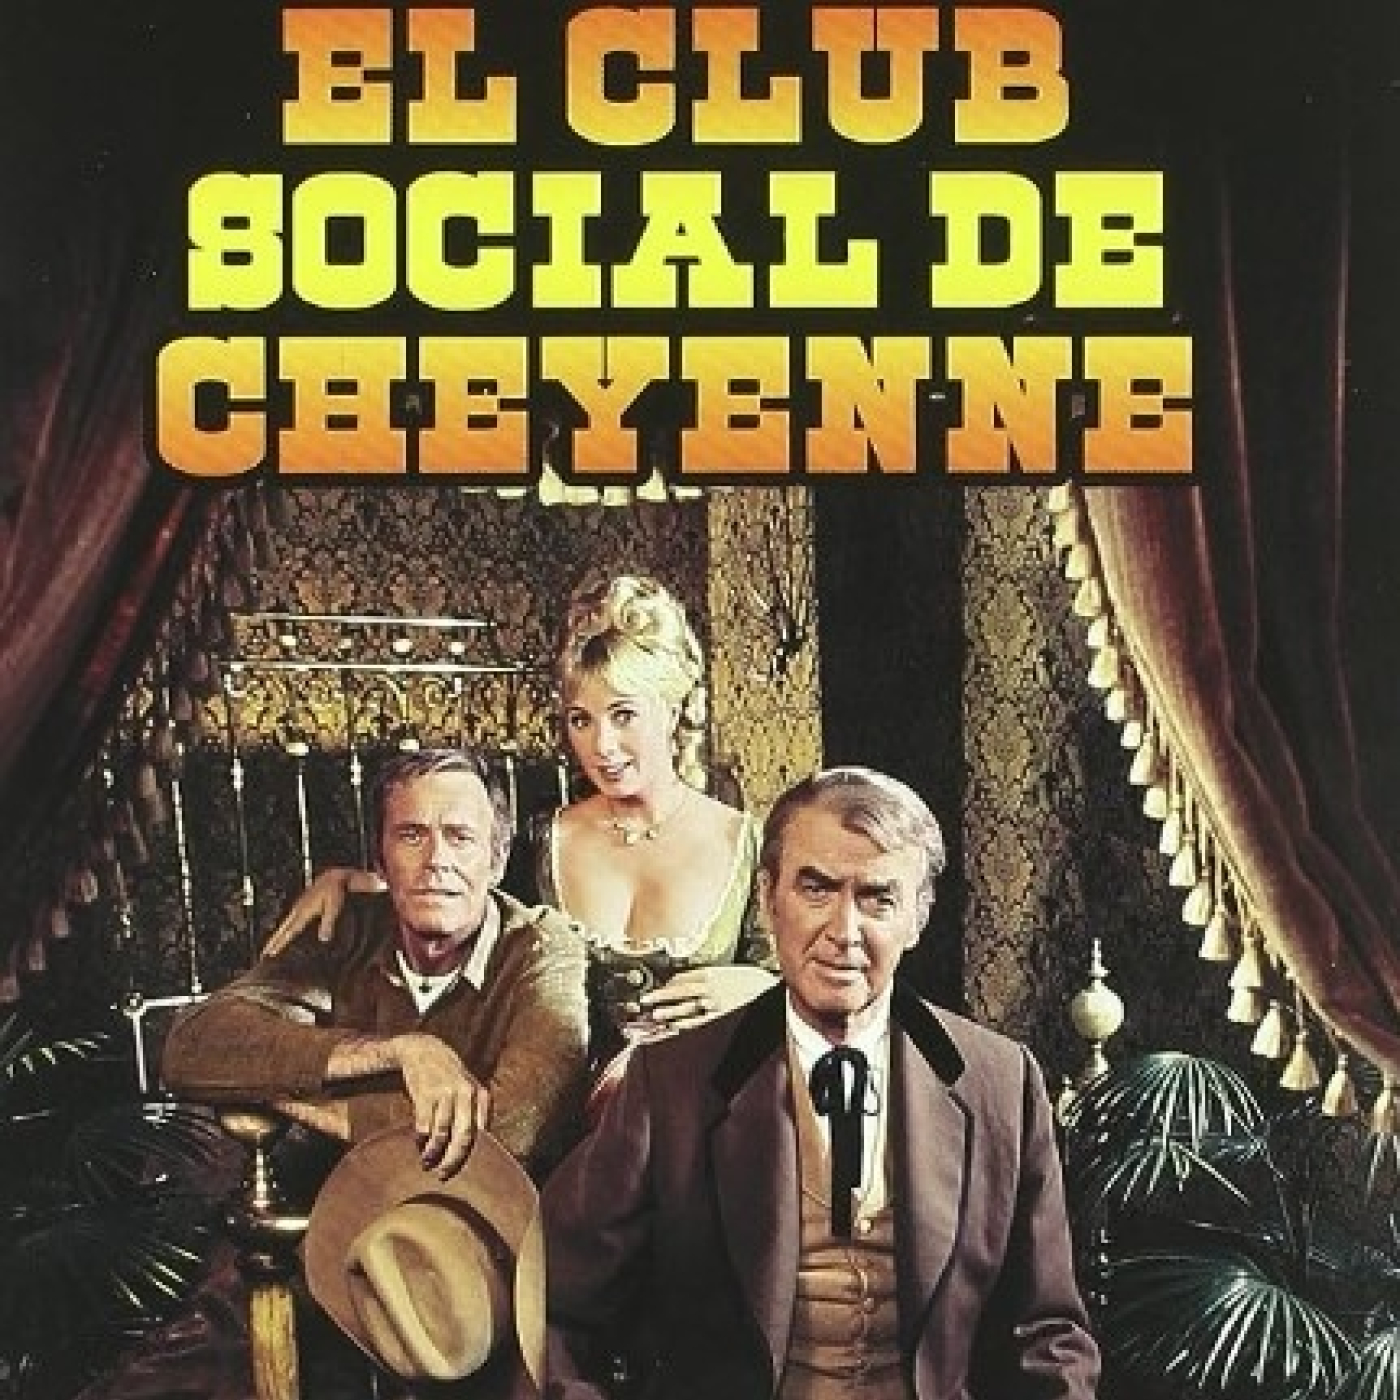 Movies Requests - The Cheyenne Social Club - 1970